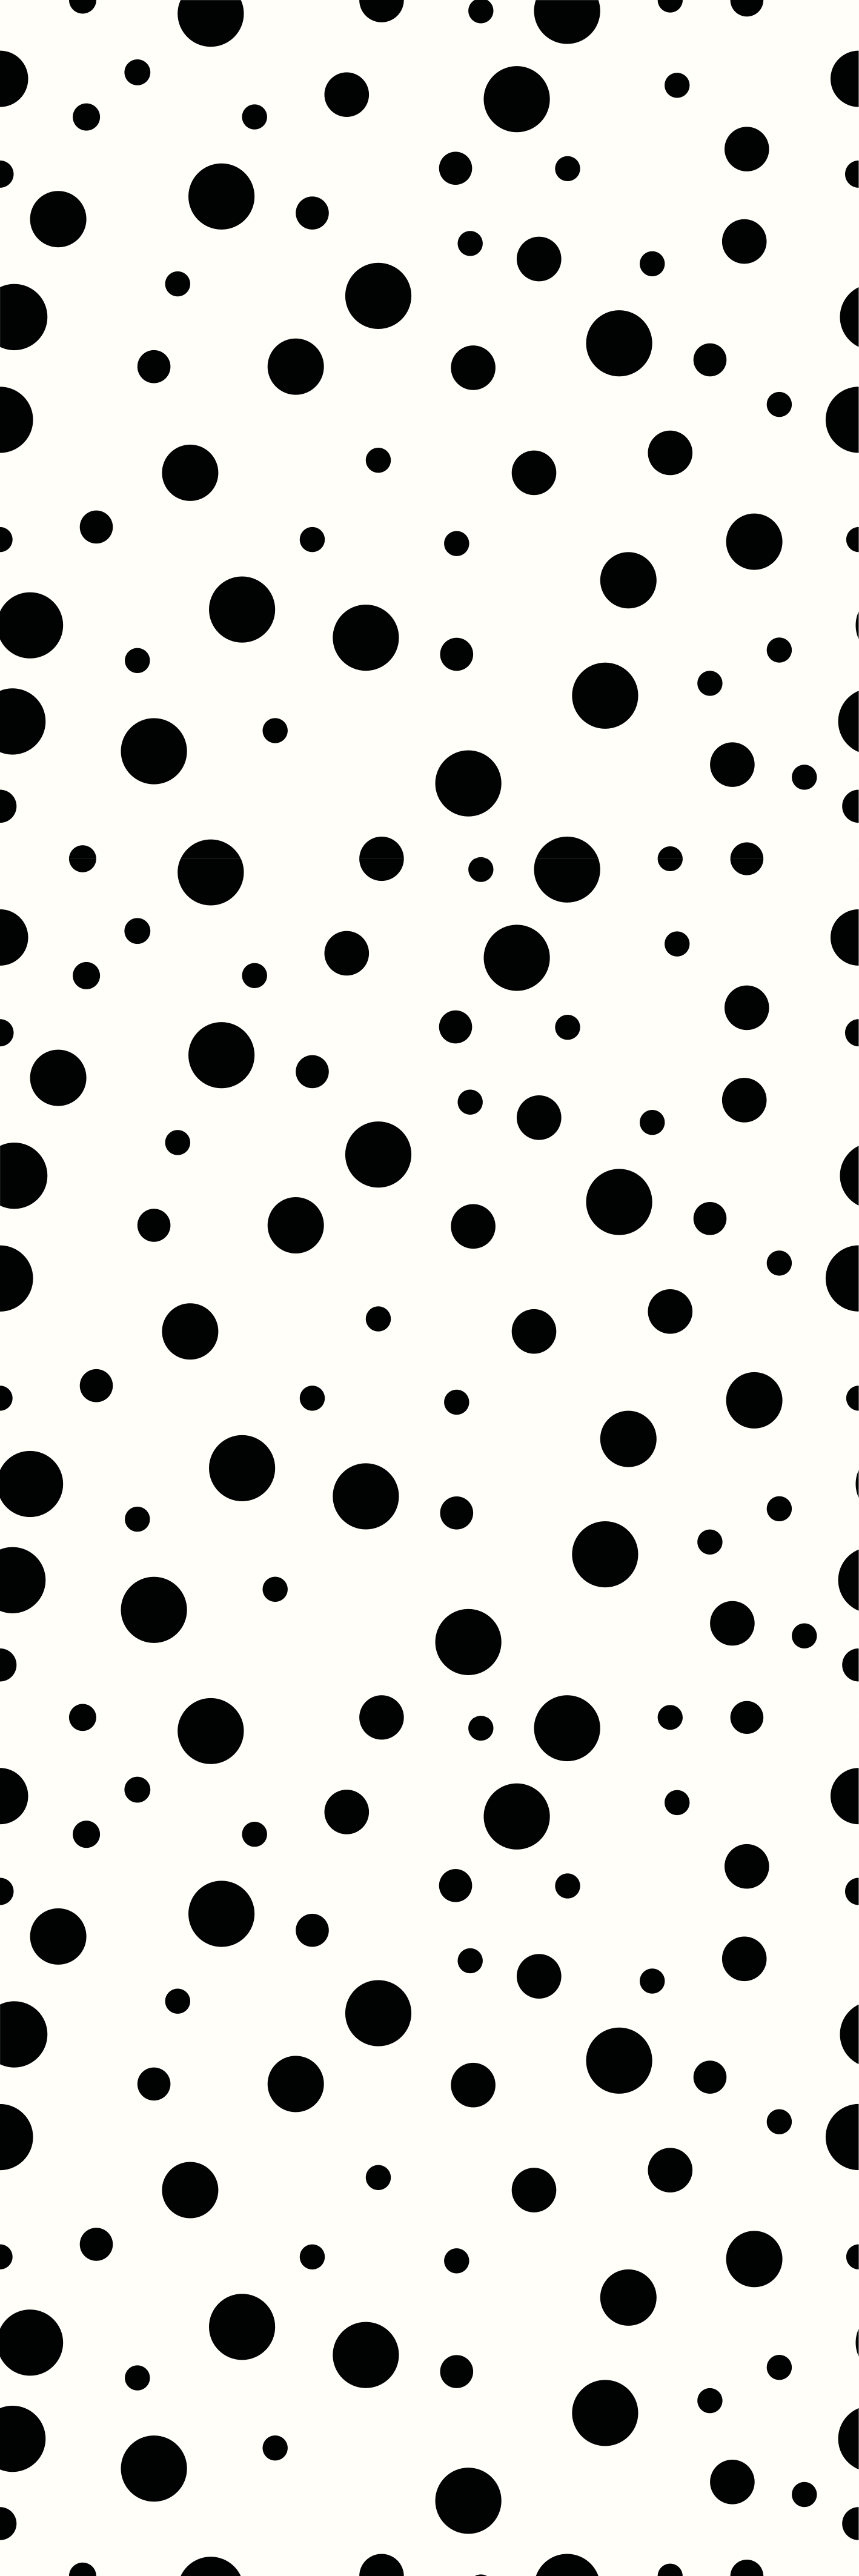 Polka Dot Wallpaper For Computer 66 images